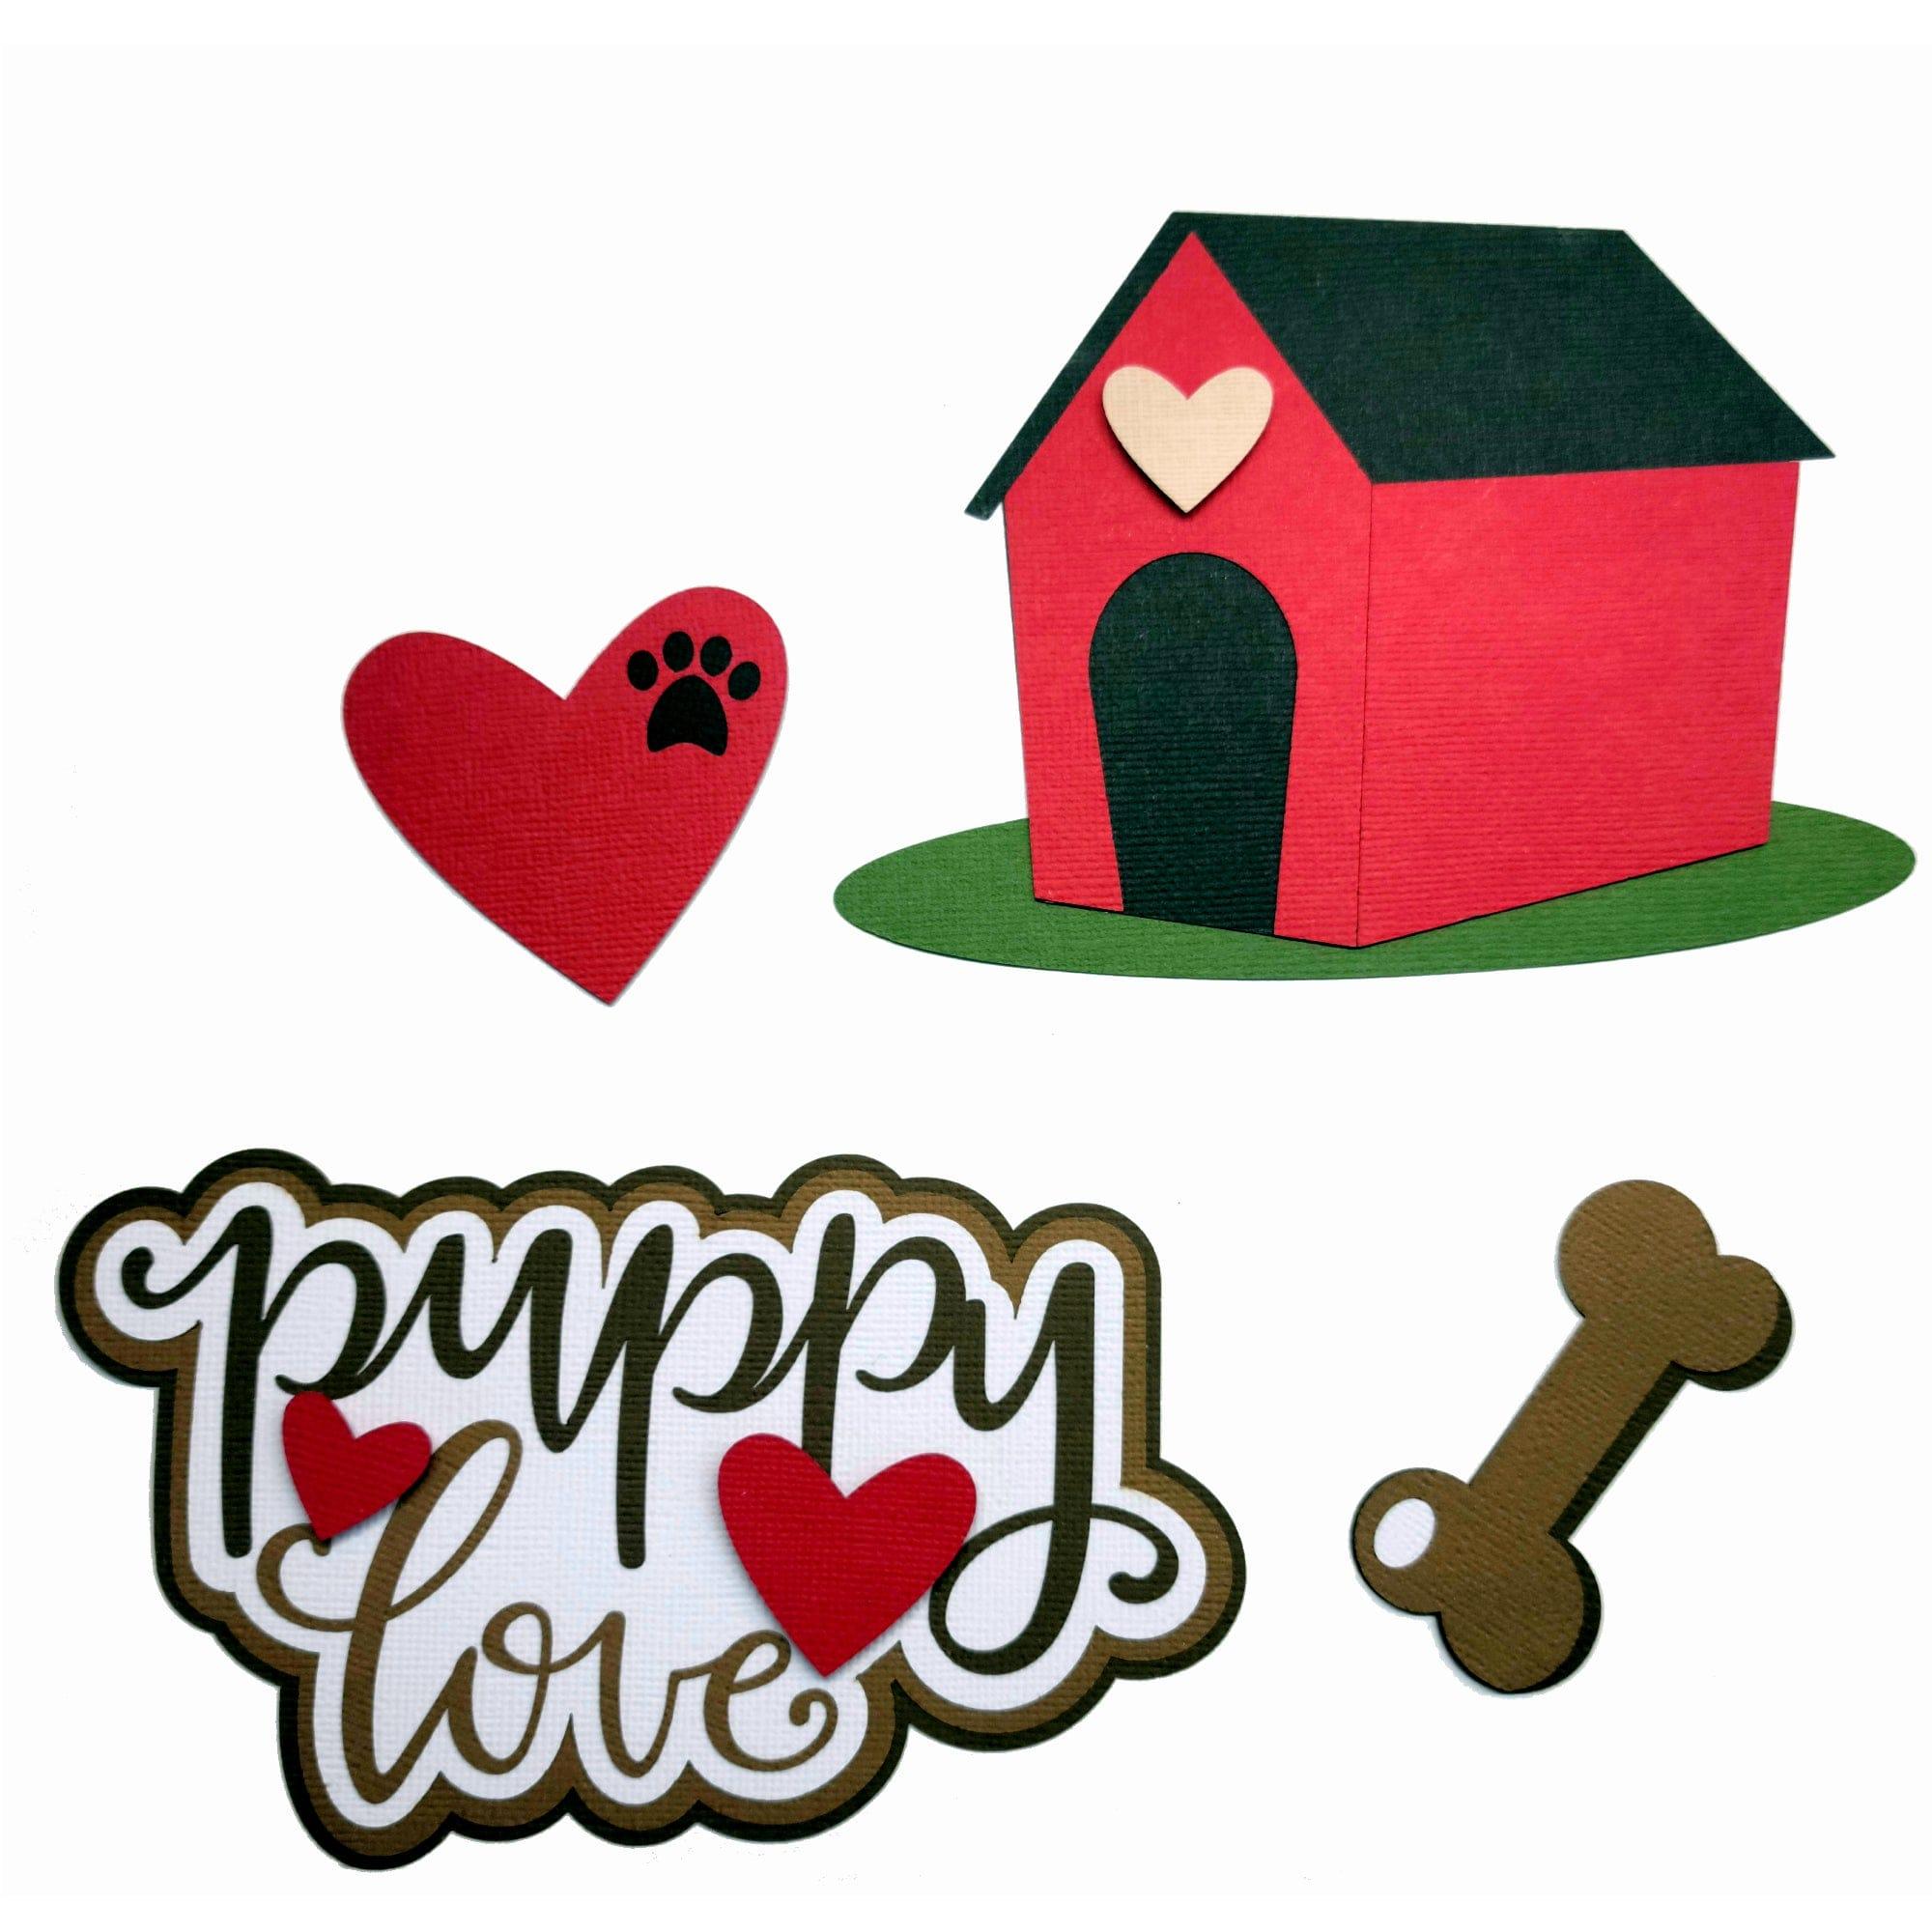 My Puppy Love Title & Accessories 4-Piece Laser Cut Scrapbook Embellishments by SSC Laser Designs